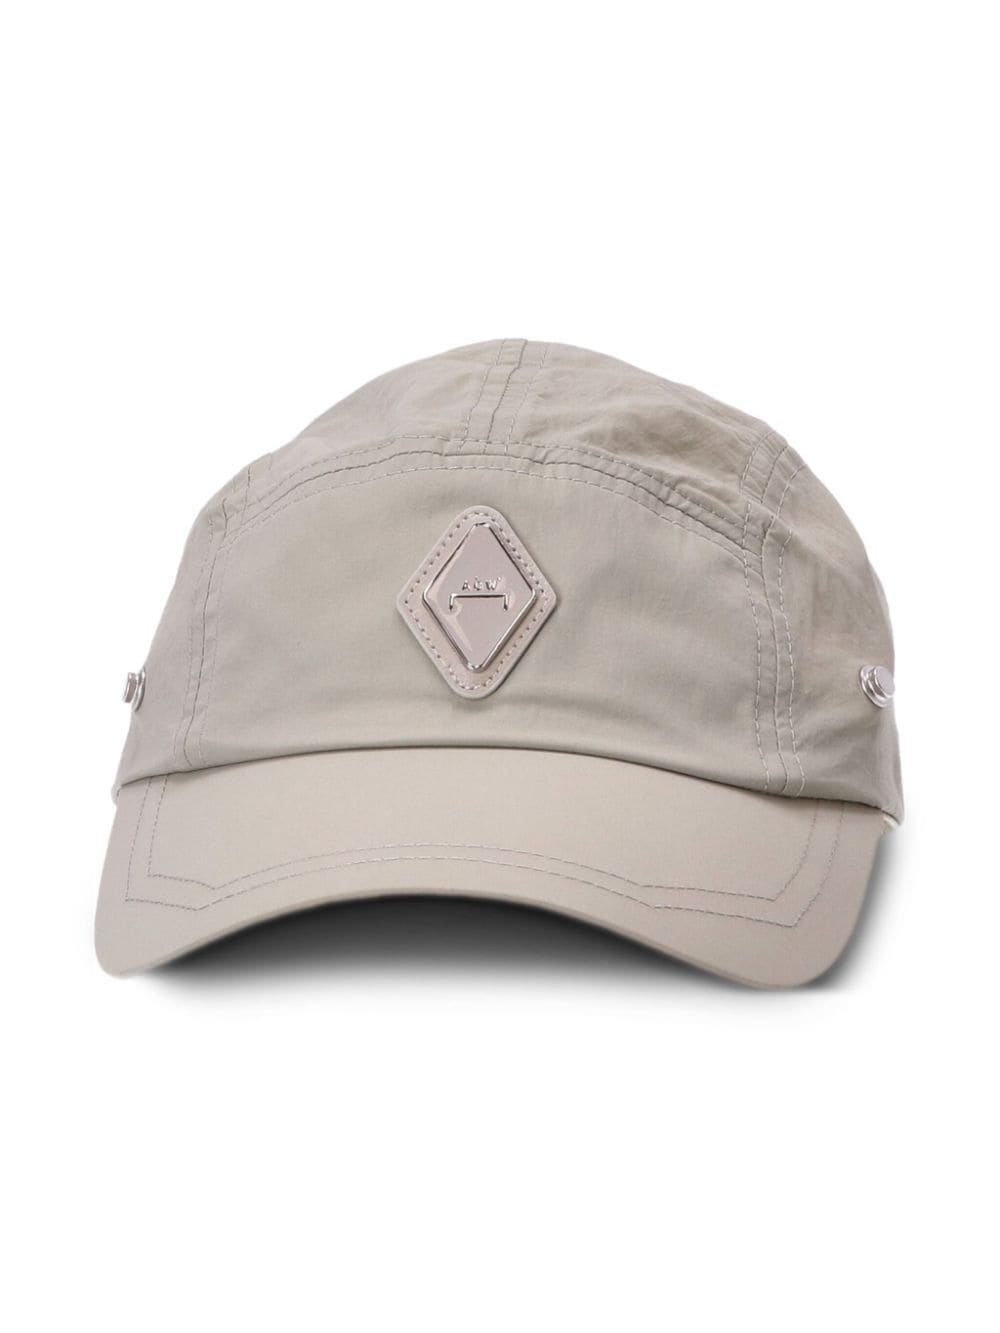 Diamond hooded cap - 2